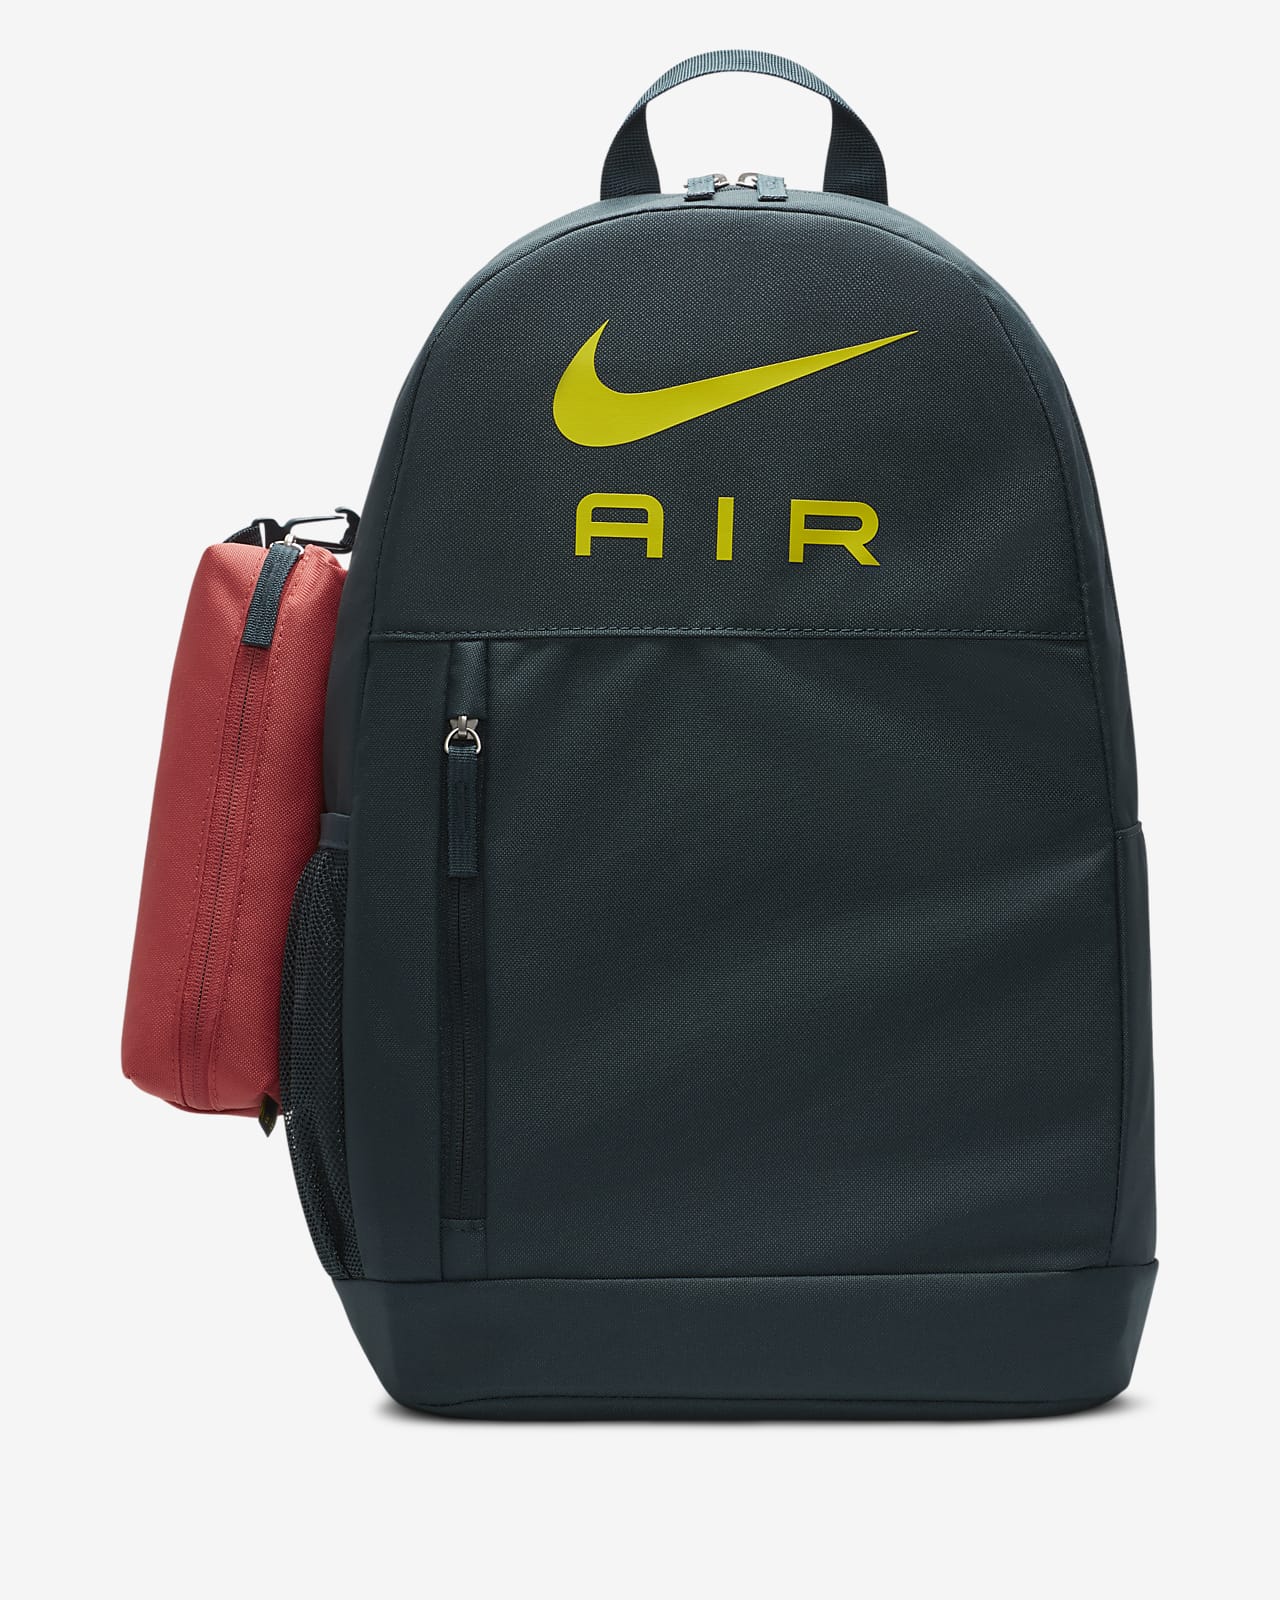 Nike One Luxe Large Backpack Dark Green Fitness School Unisex